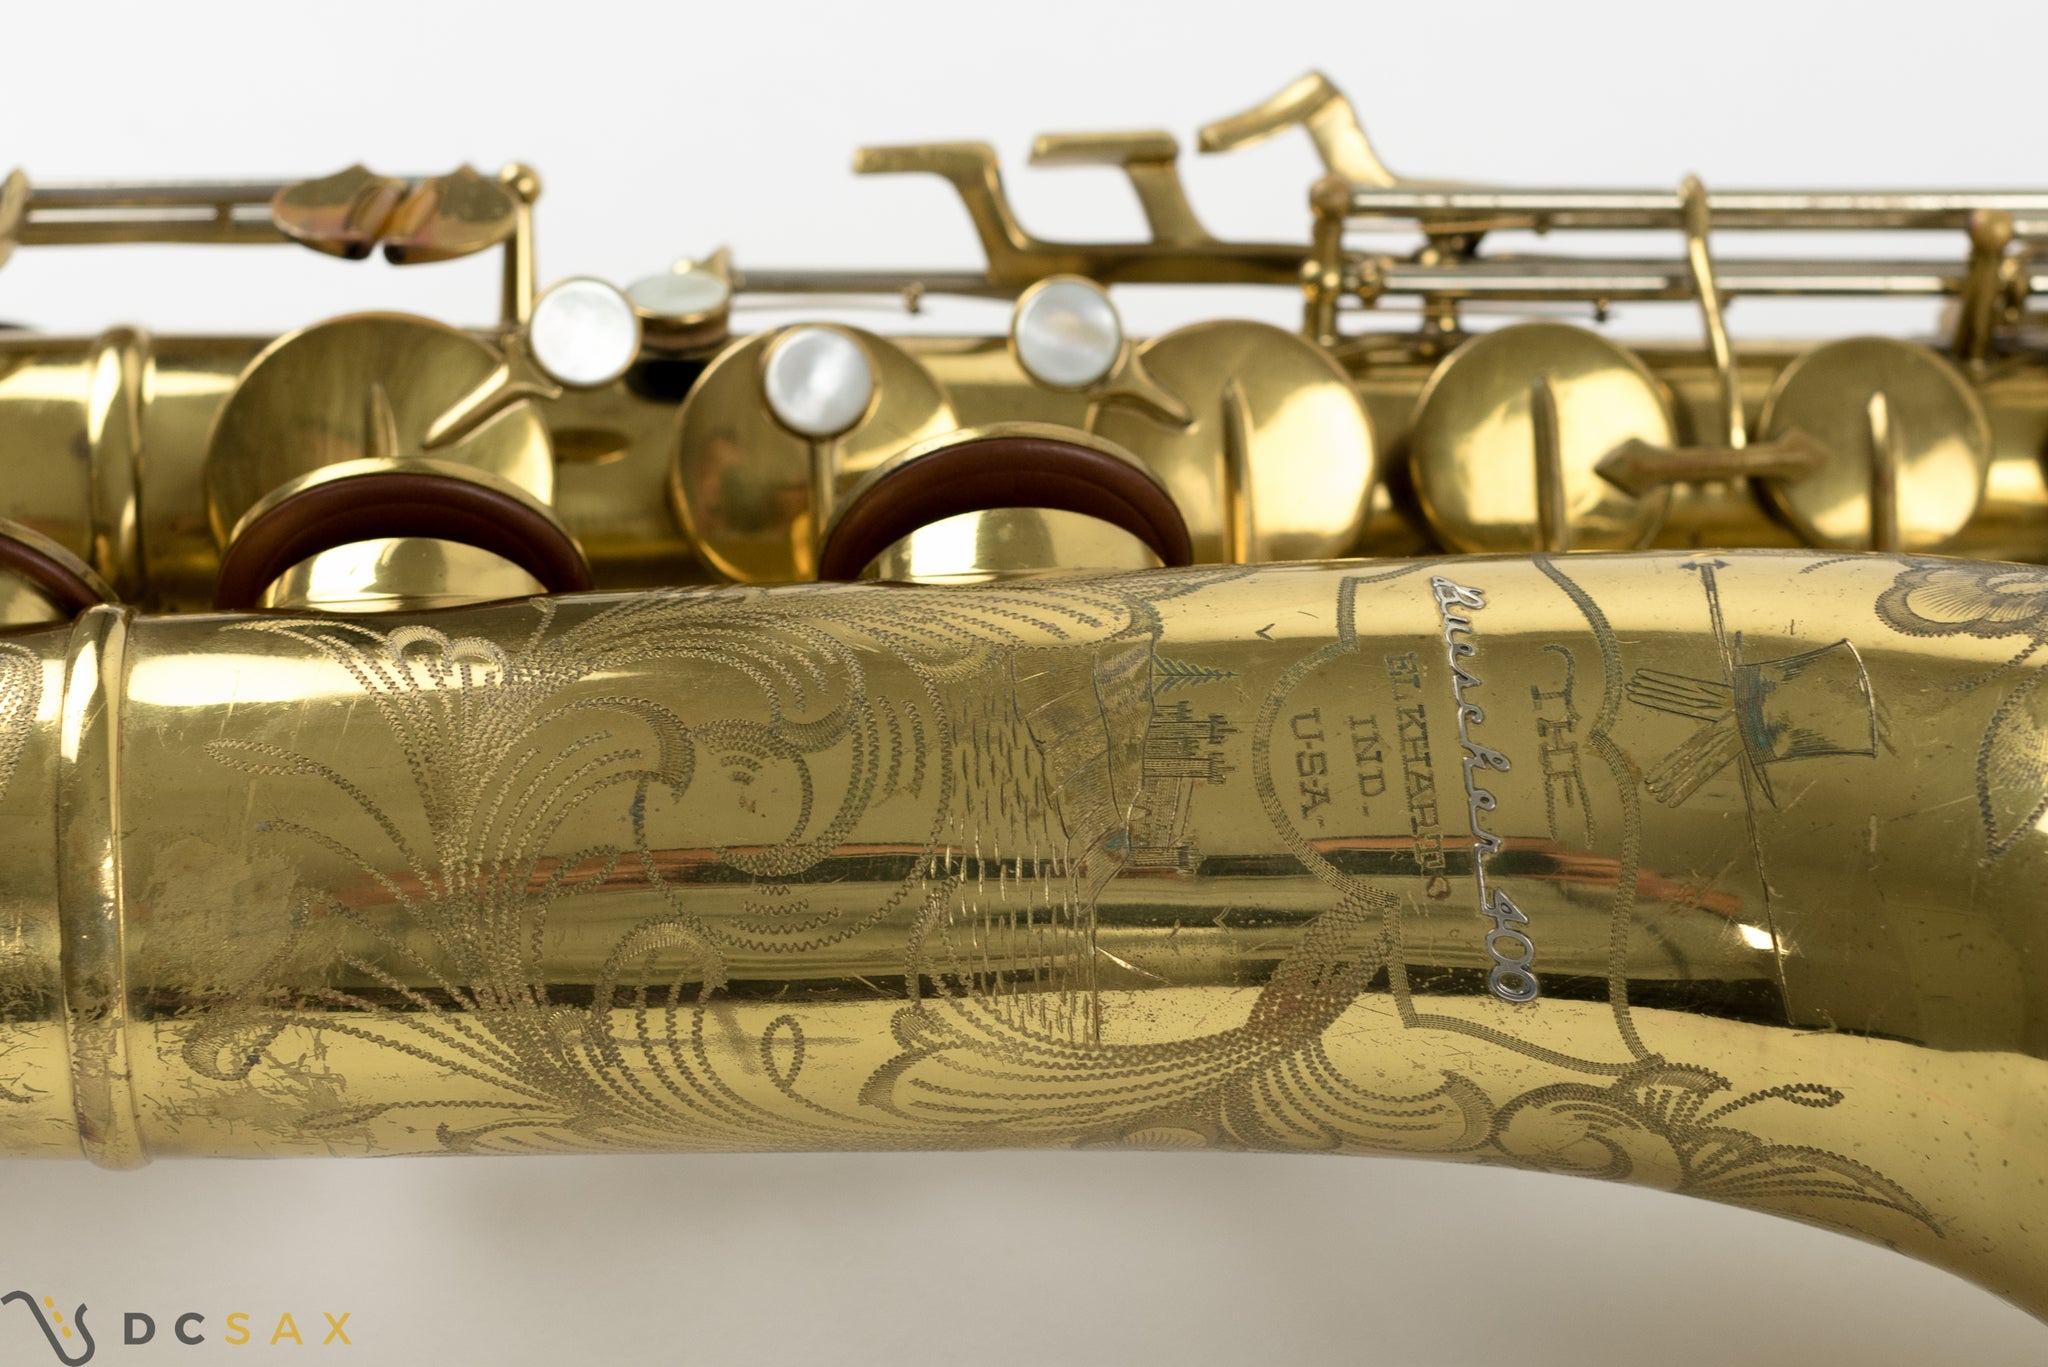 1948 Buescher 400 Top Hat and Cane Tenor Saxophone, 97% Original Lacquer